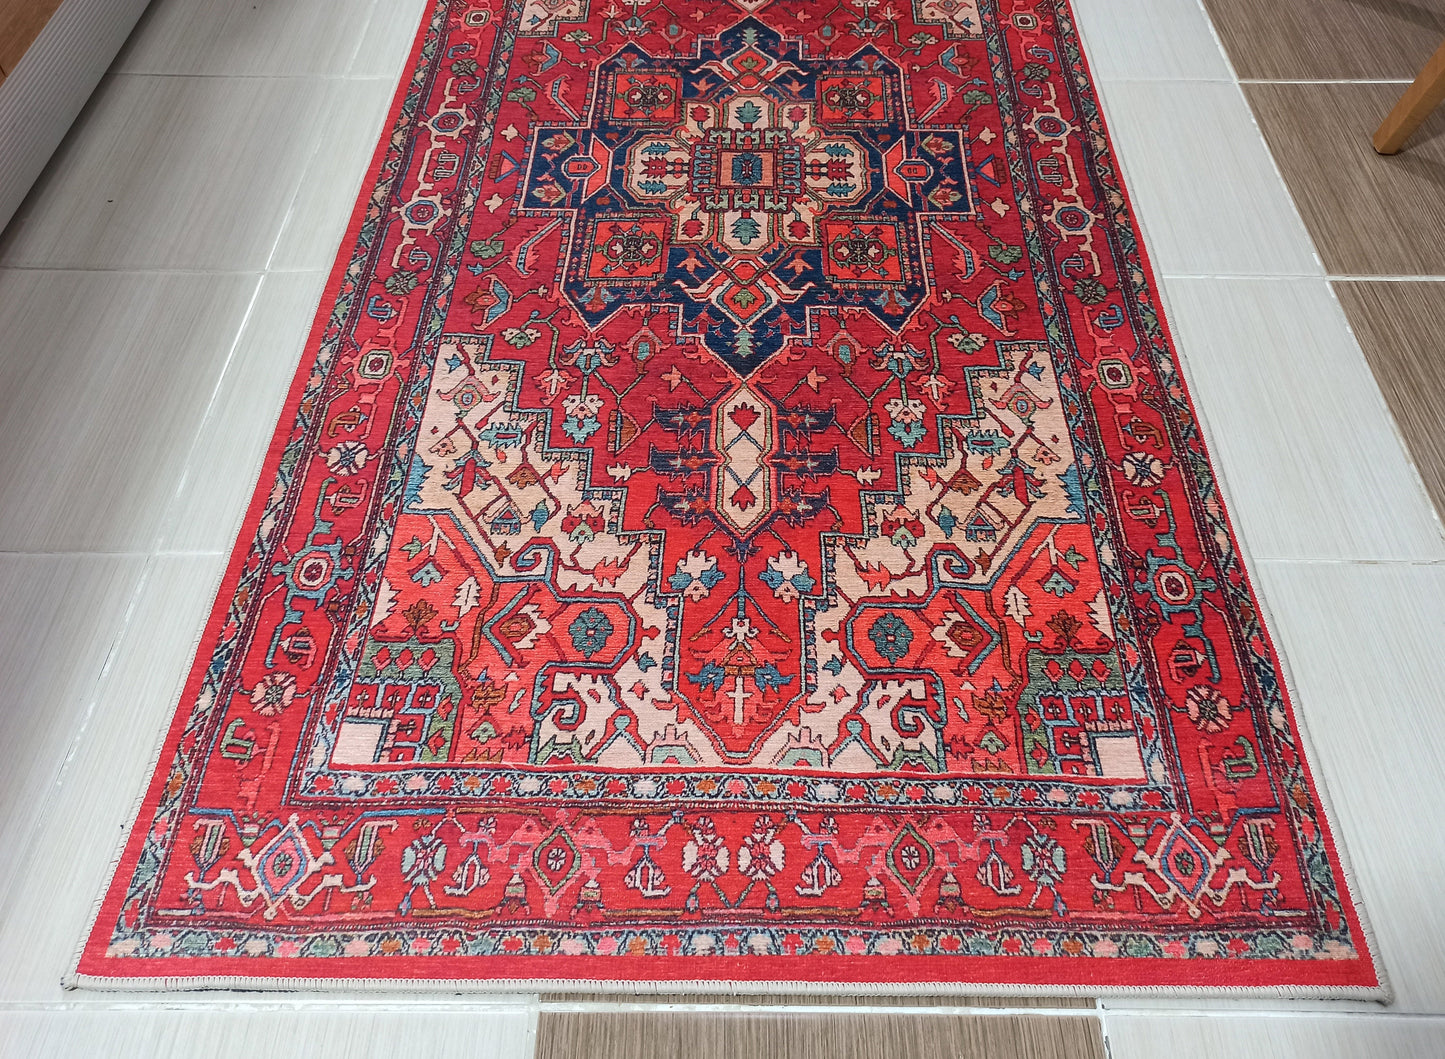 ALIN Runner | Persian Heriz Runner, Red Beige Vintage Distressed look Runners, Bohemian Home decor, Mid-century Design Carpet, Fame Rugs, Teppich